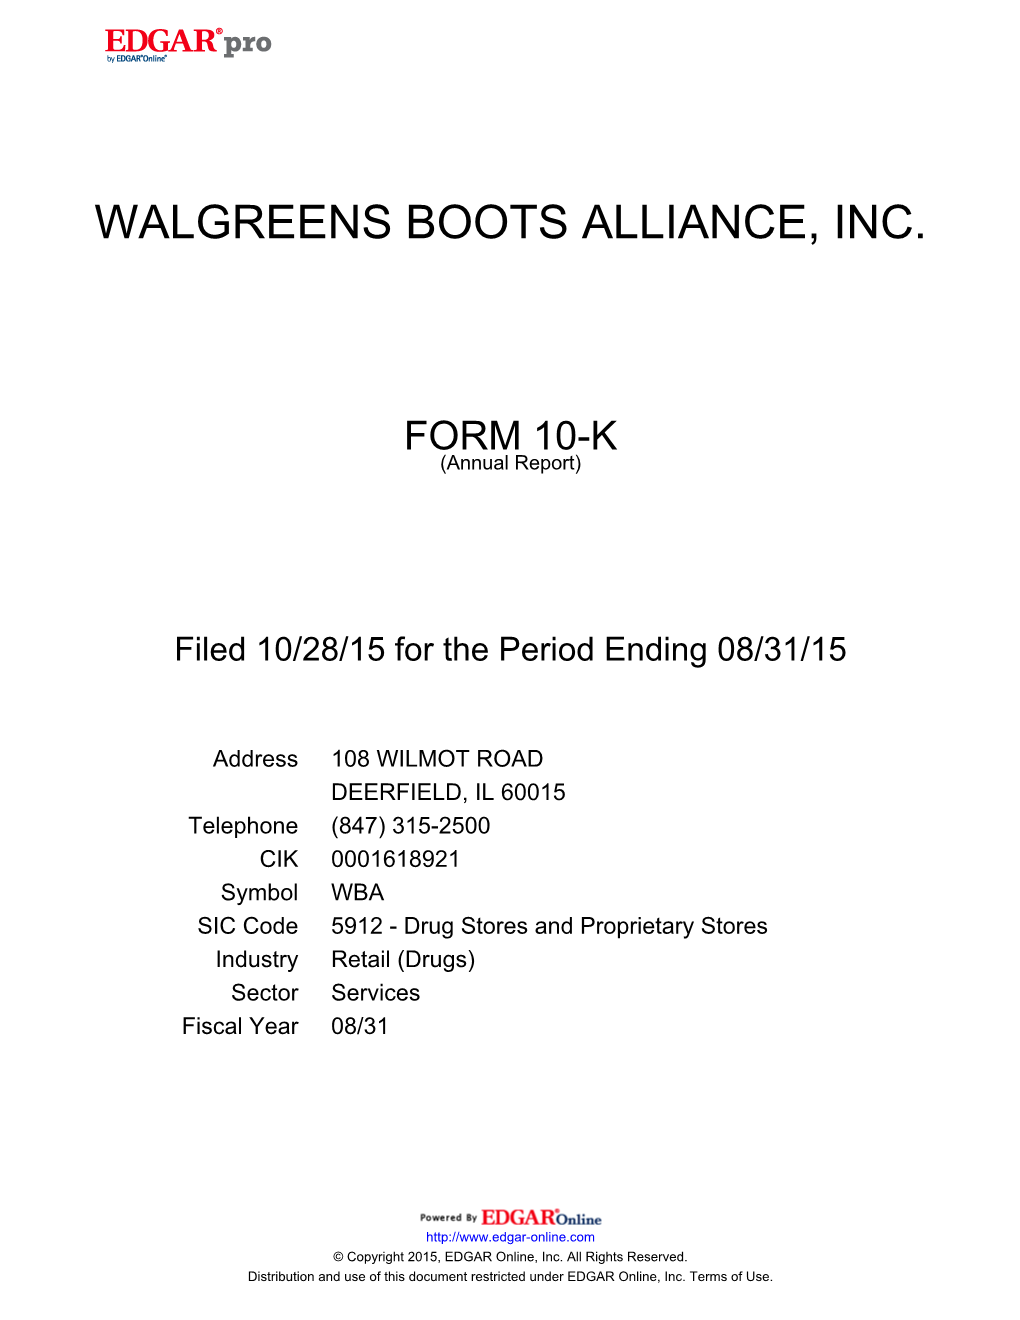 Walgreens Boots Alliance, Inc